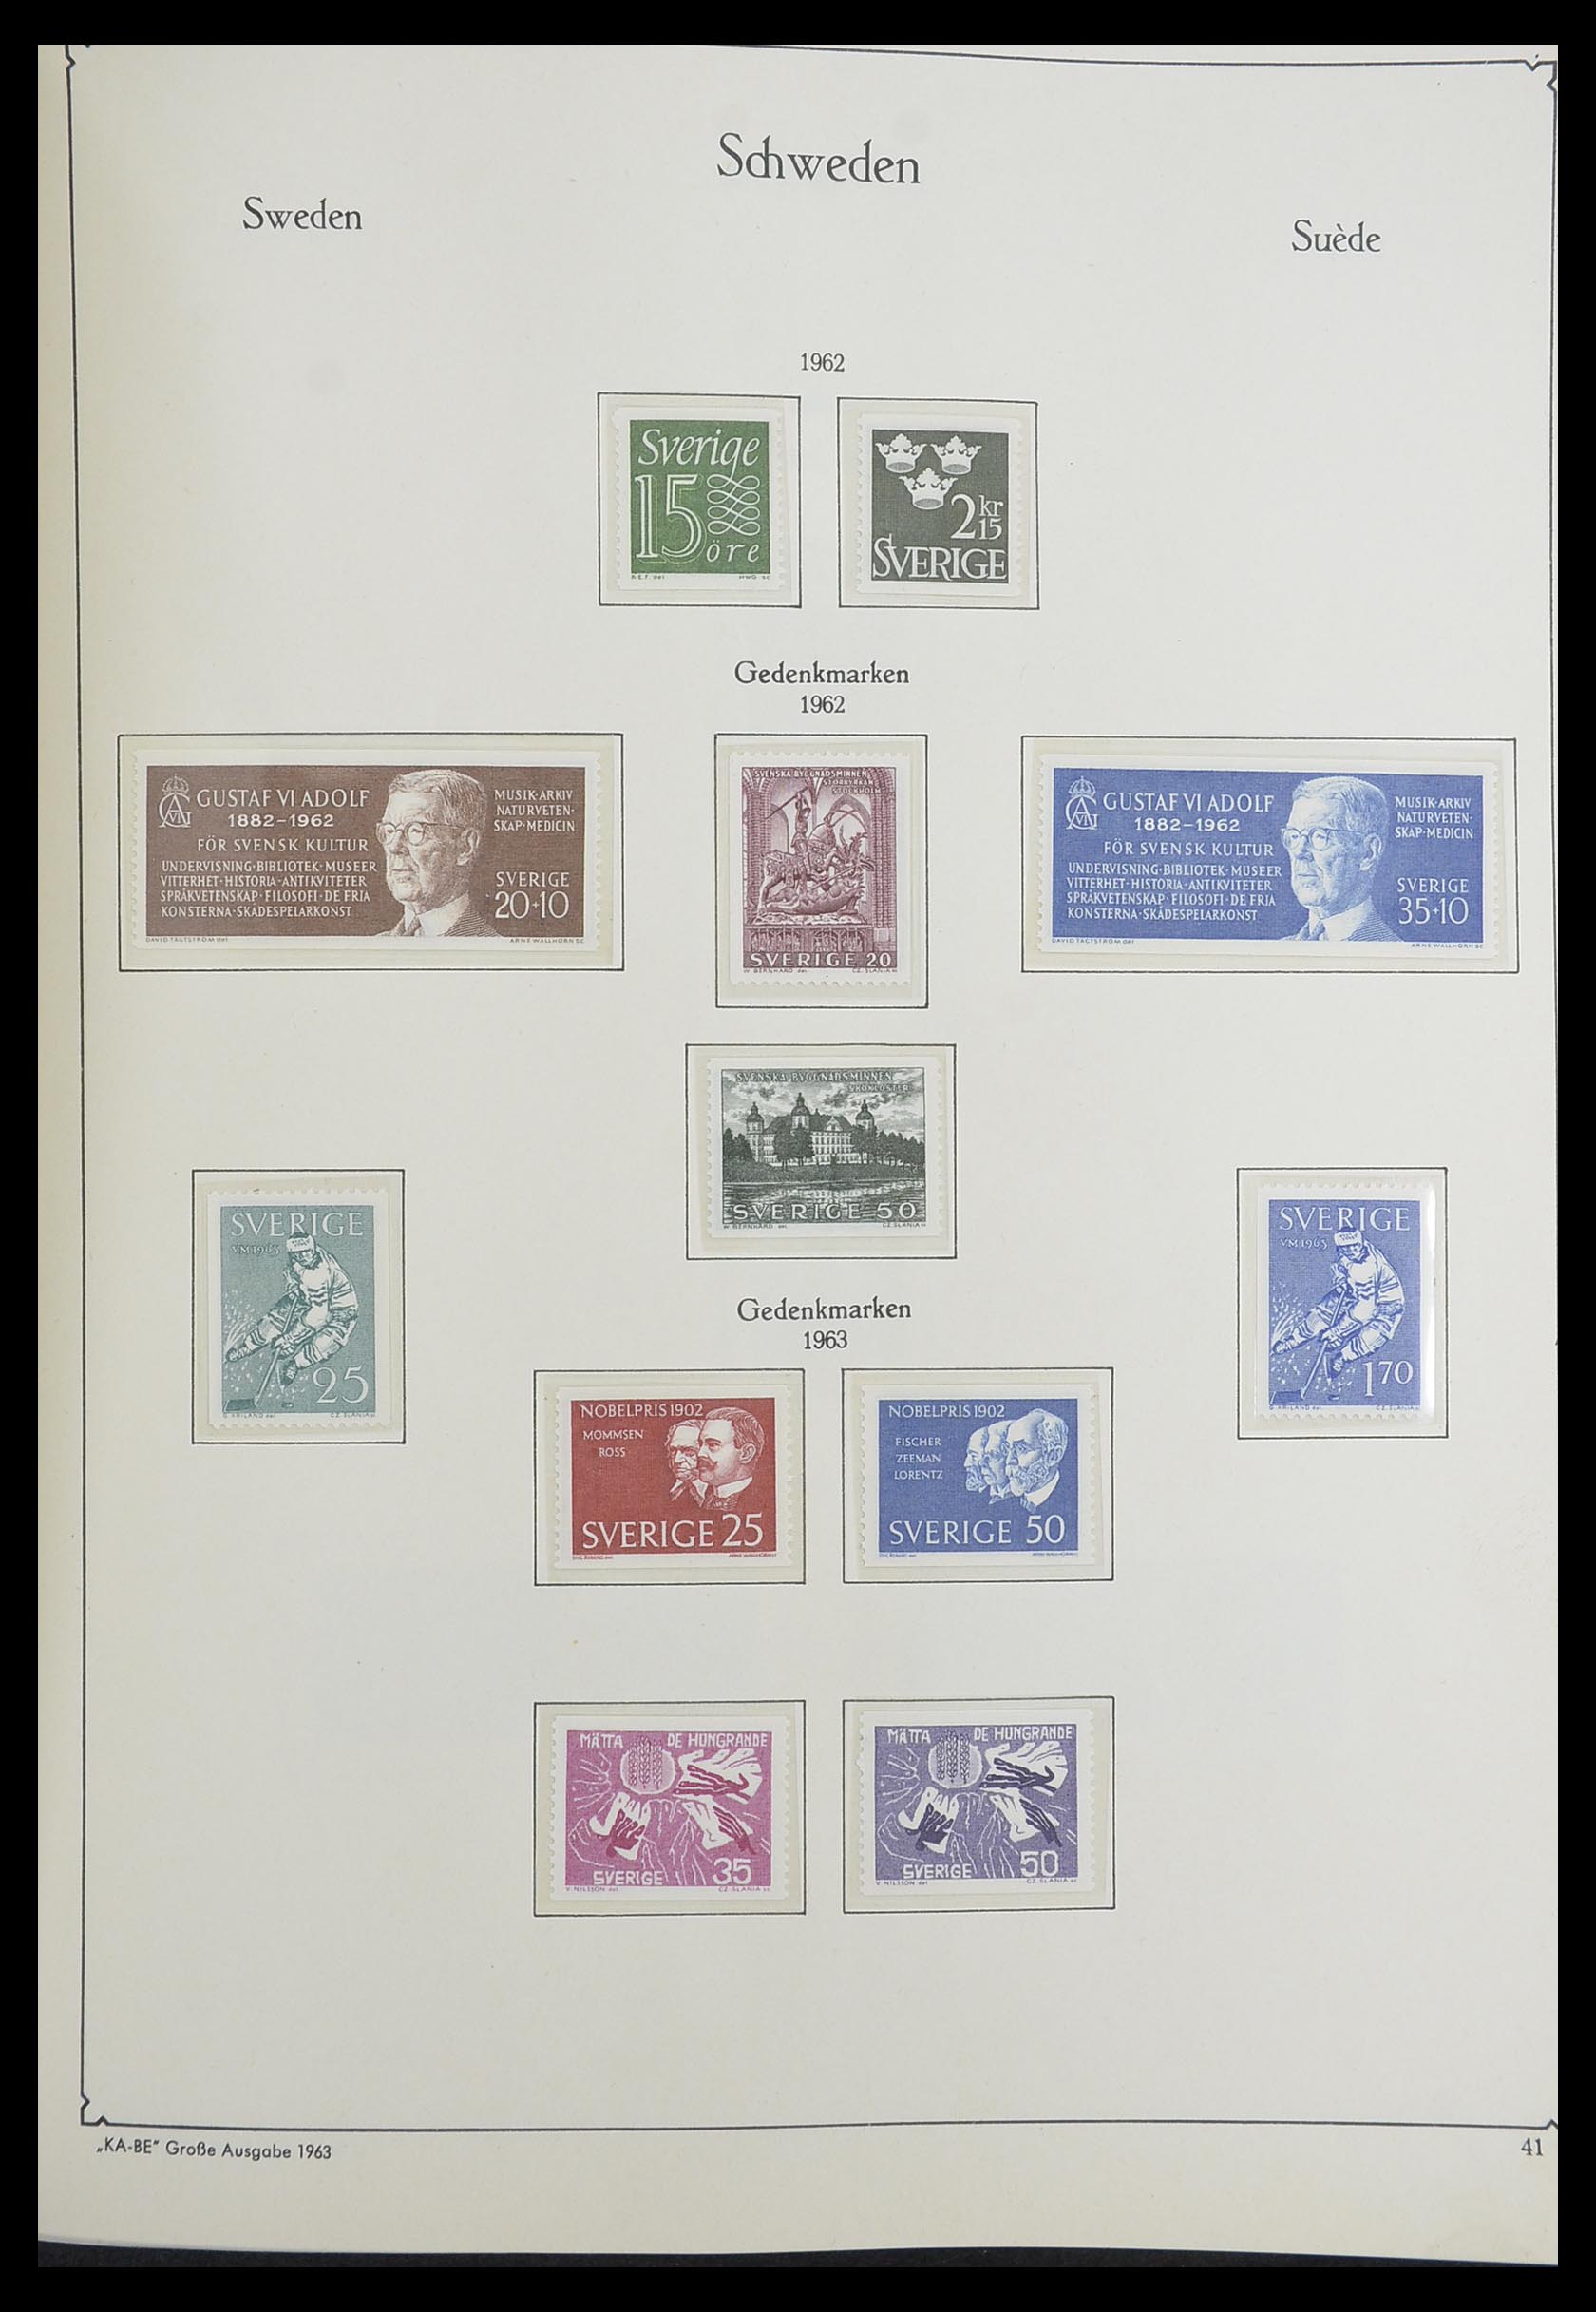 33379 207 - Stamp collection 33379 Scandinavia 1856-1972.